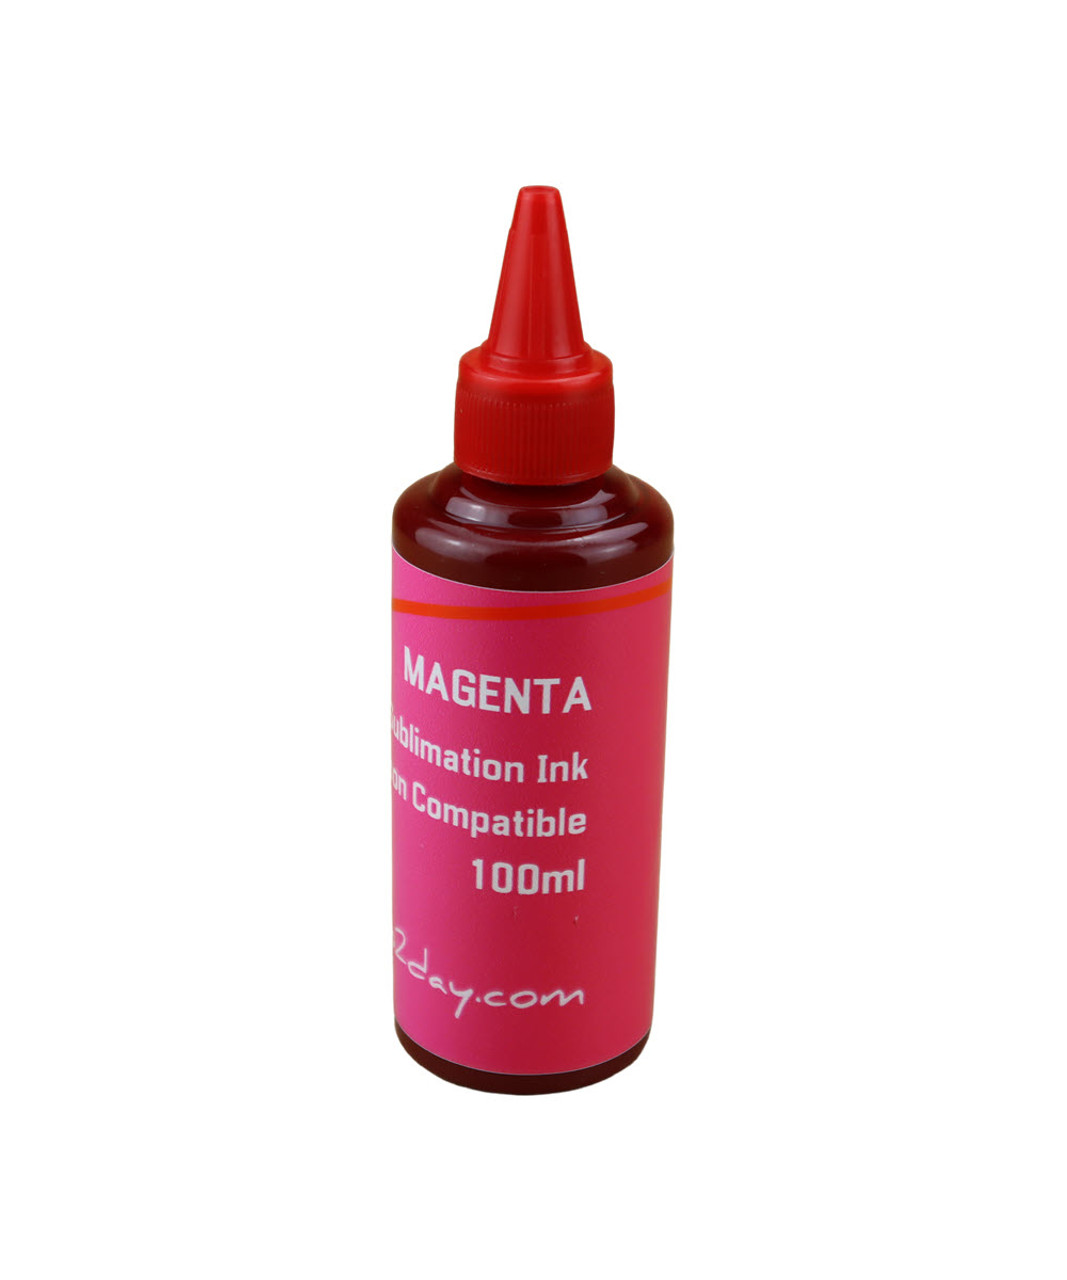 Magenta Dye Sublimation Ink 100ml Bottle for Epson WorkForce Pro WF-7310, WF-7820, WF-7840 Printers